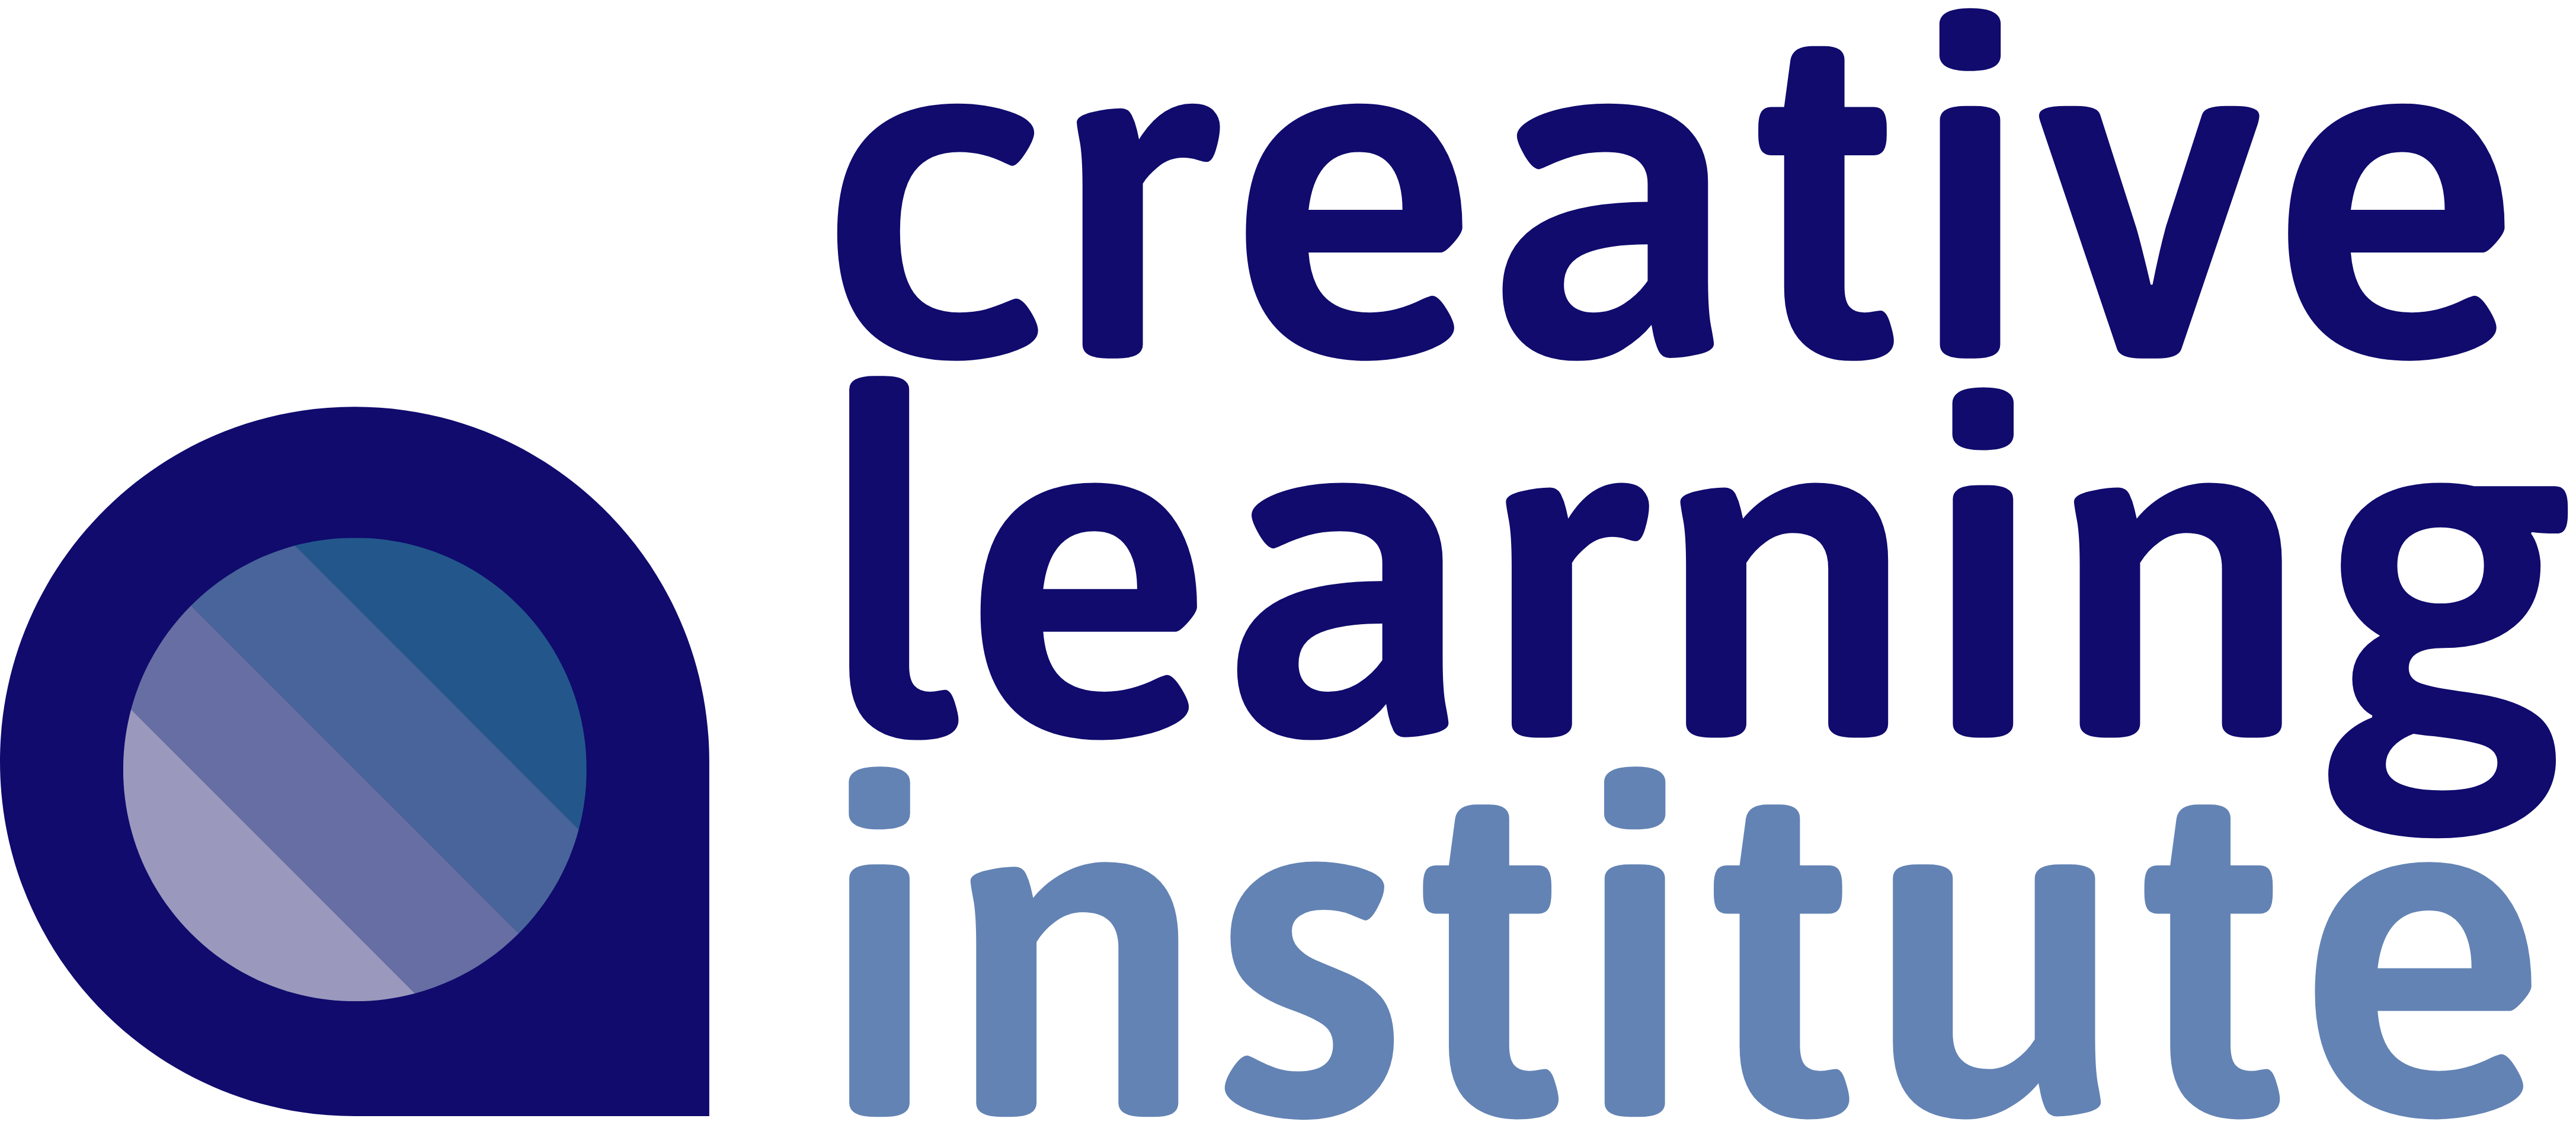 Creative Learning Institute